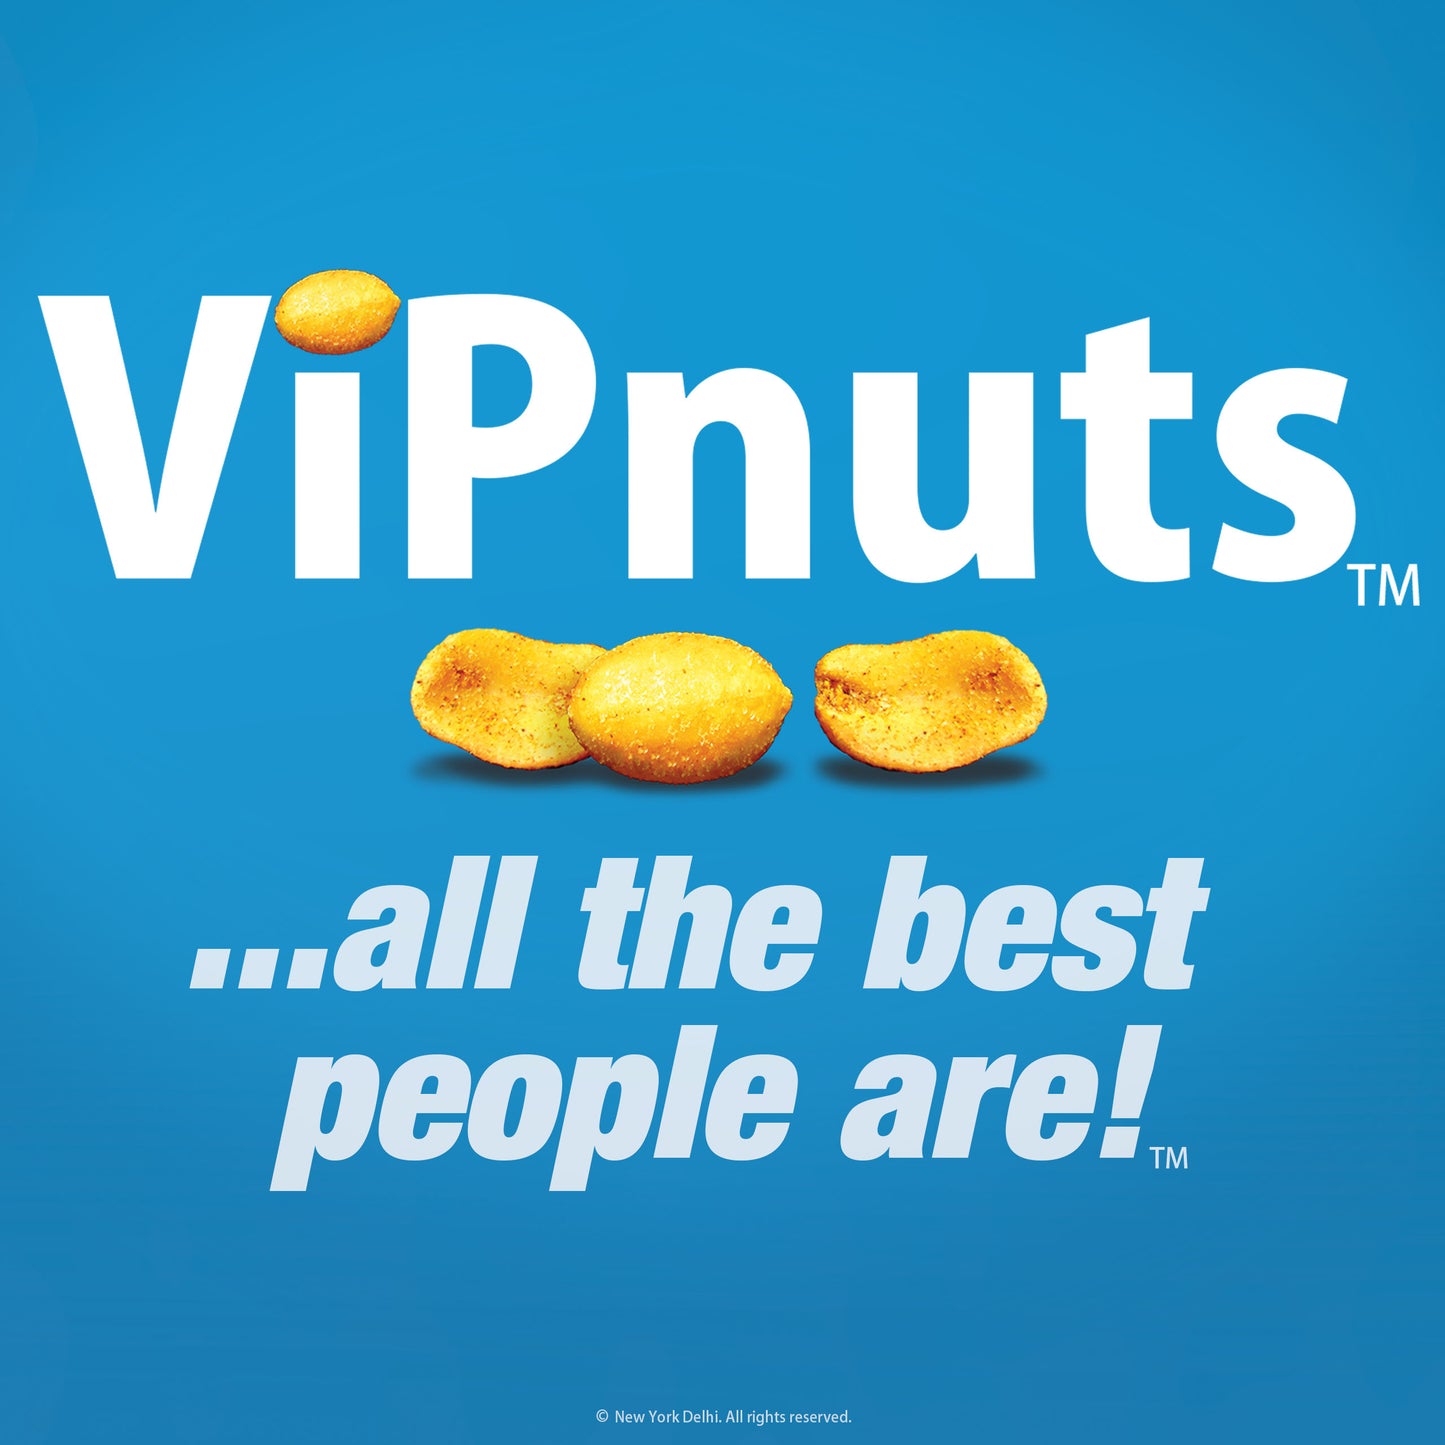 ViPnuts Cheese & Onion peanuts 63g pack